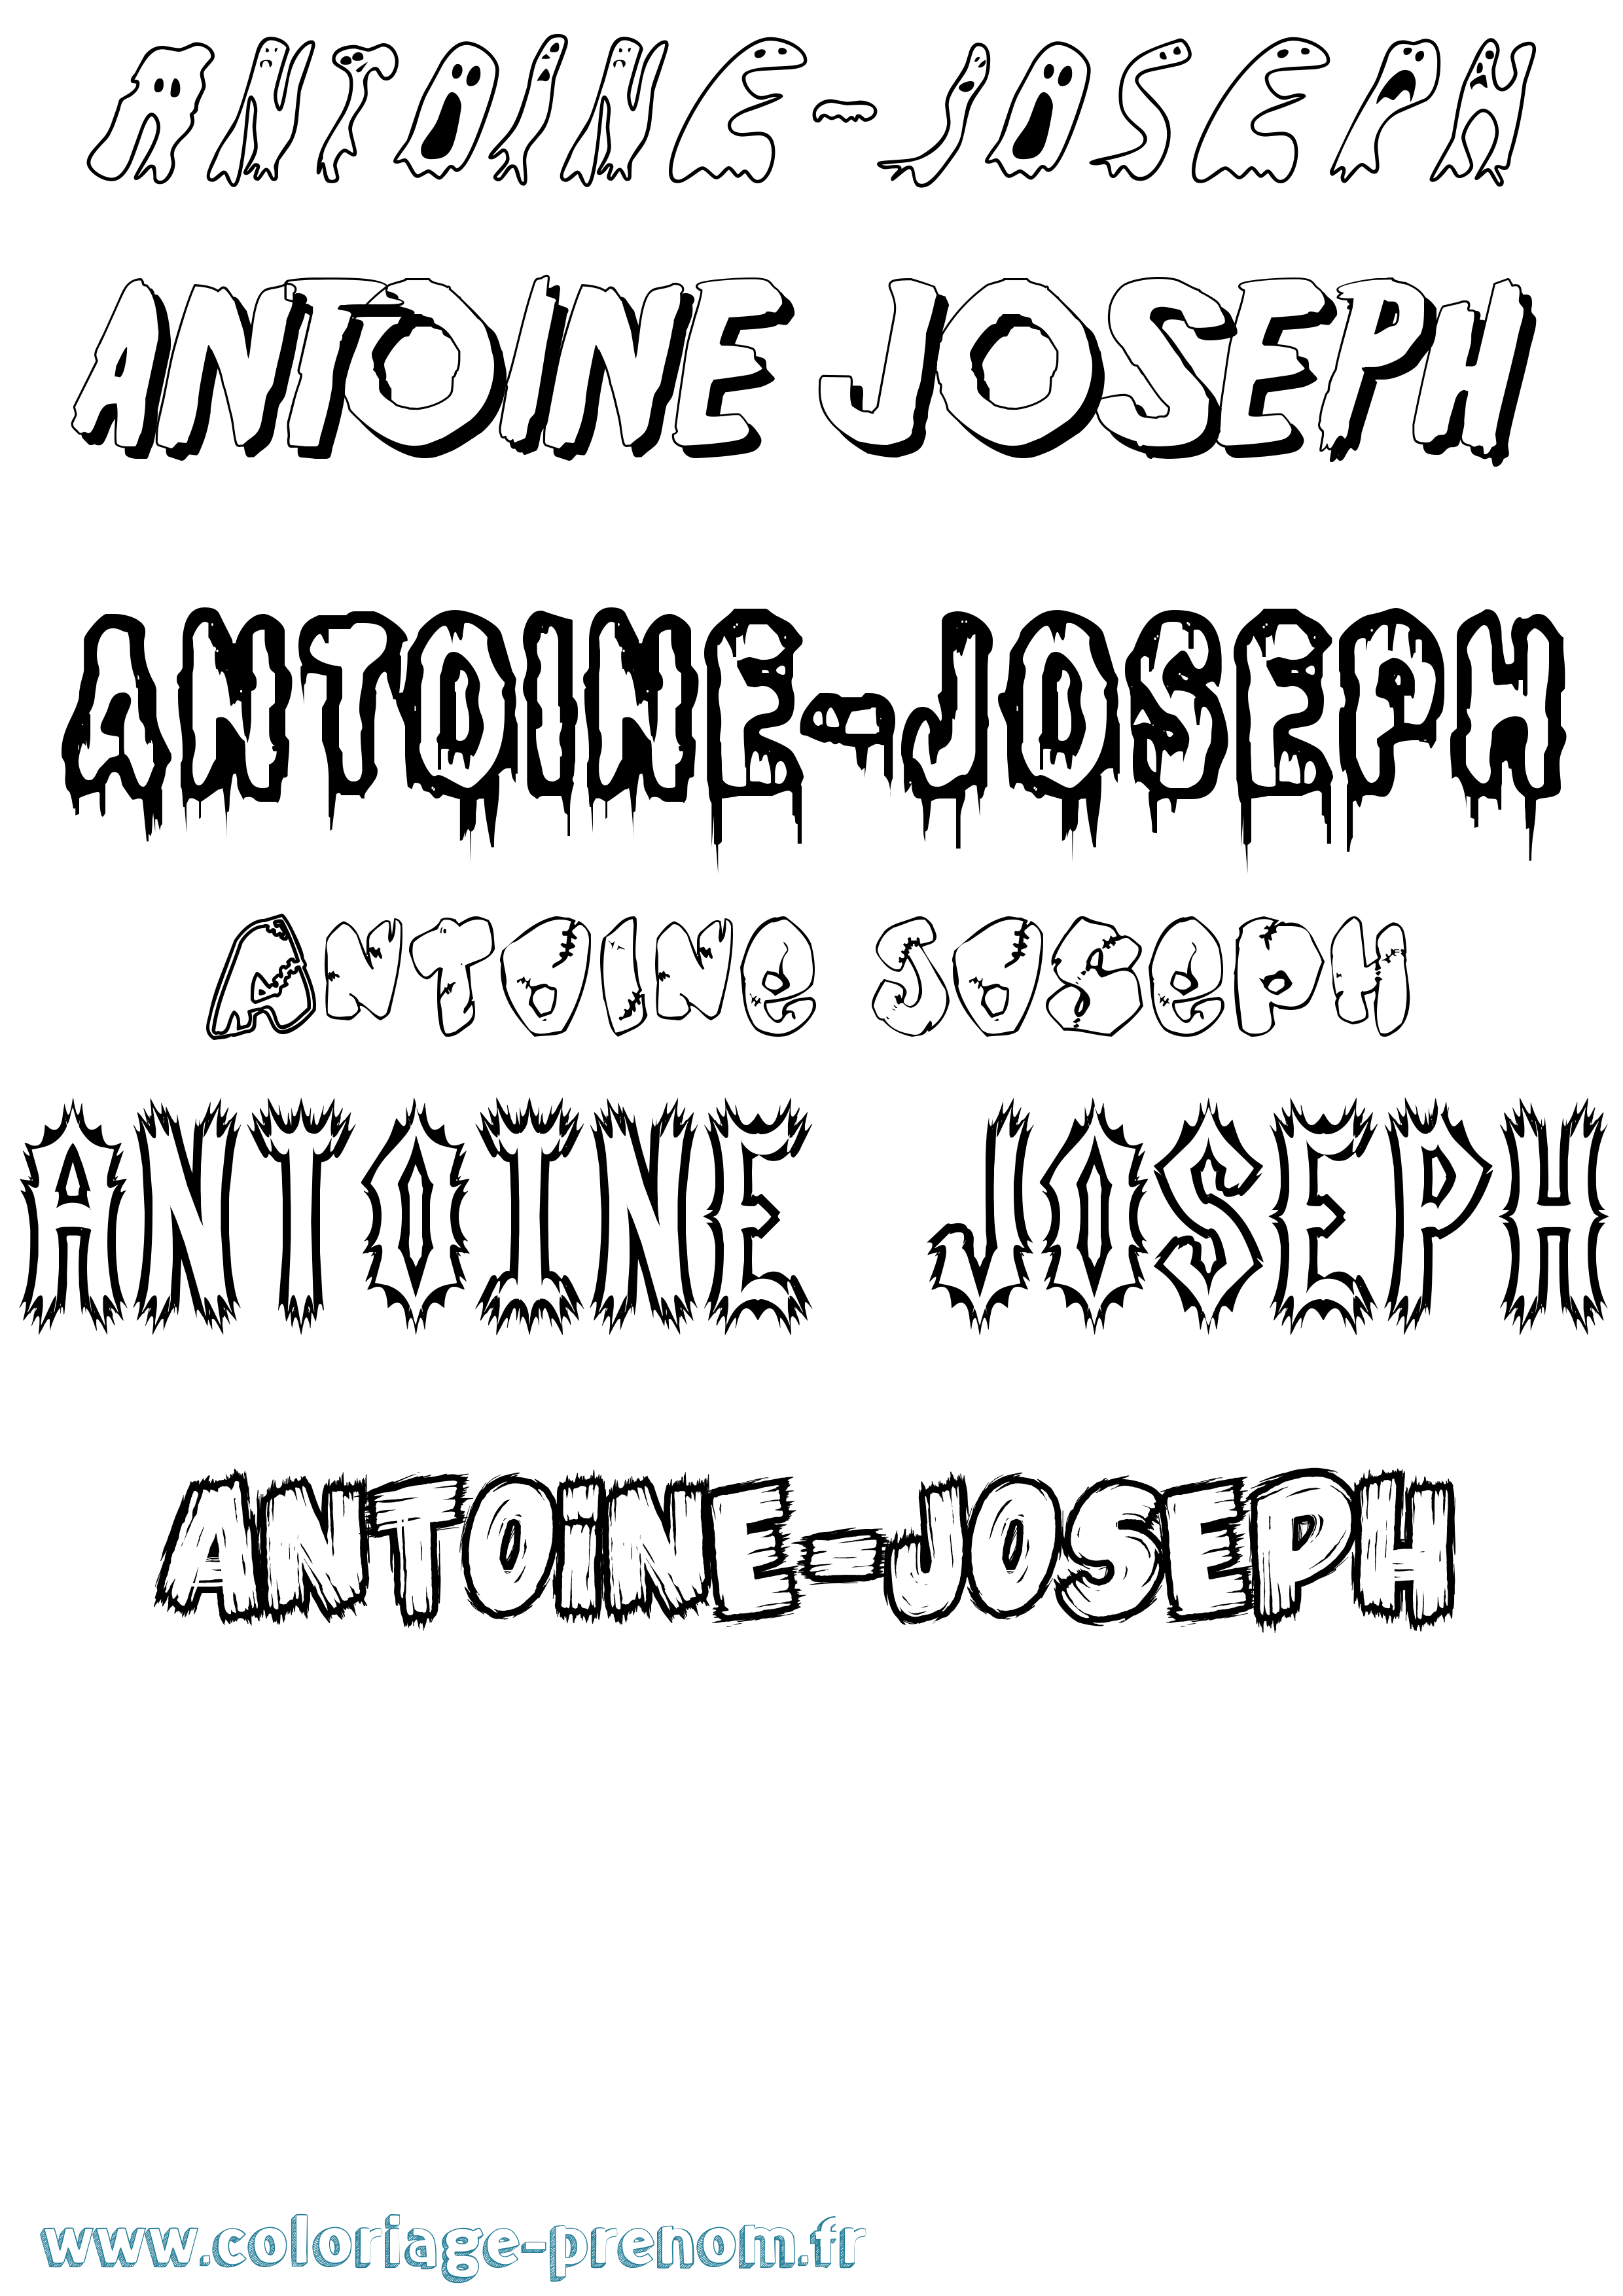 Coloriage prénom Antoine-Joseph Frisson